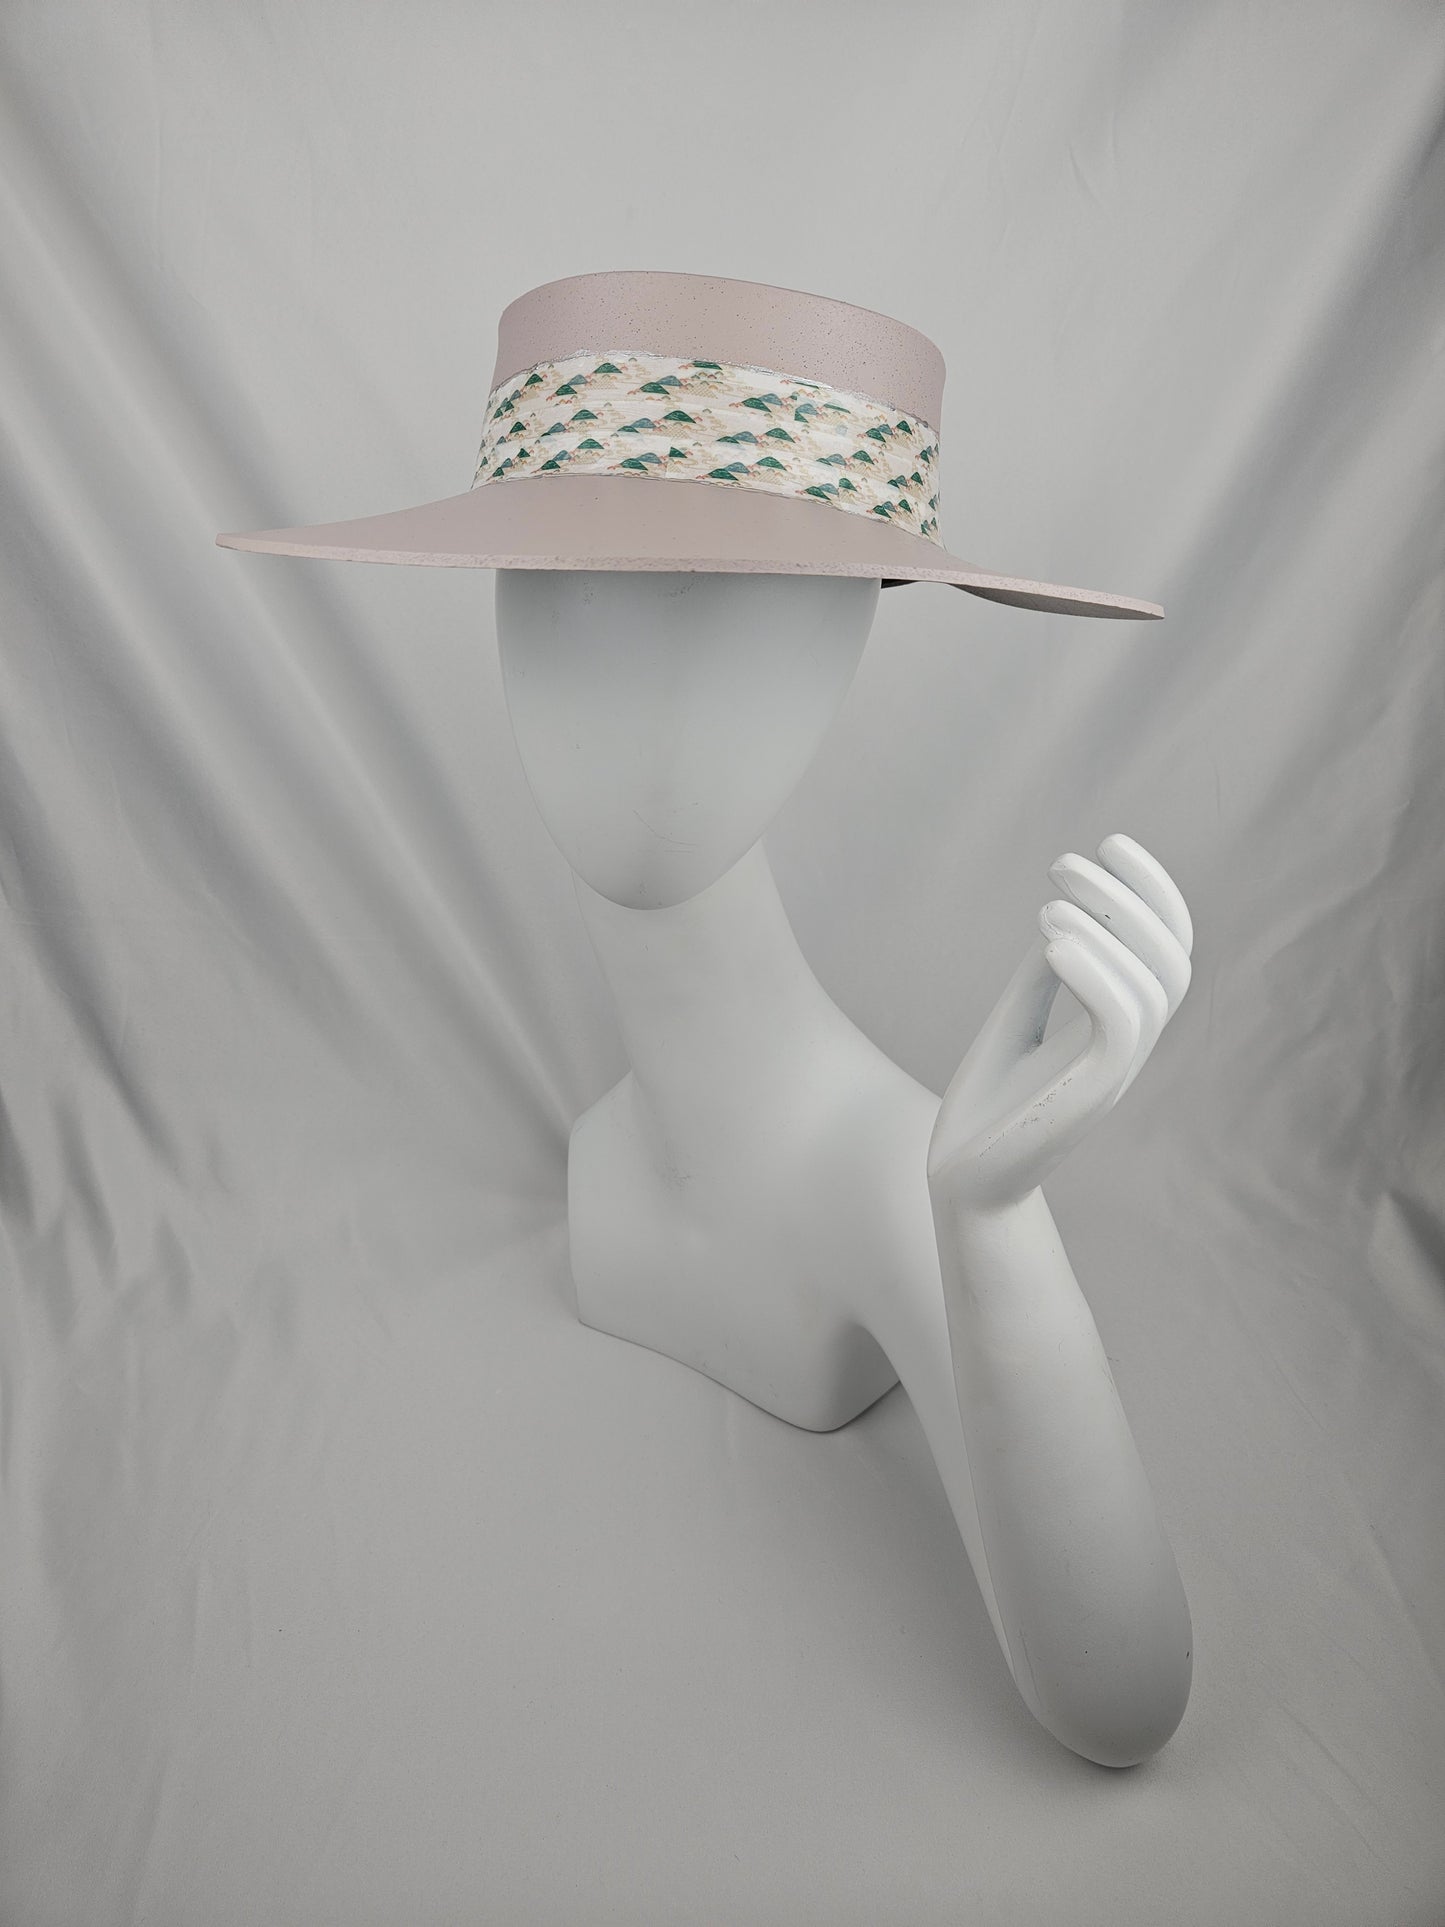 Soft Pink Audrey Foam Sun Visor Hat with Green Printed Band: 1950s, Walks, Brunch, Asian, Golf, Easter, Church, No Headache, Derby